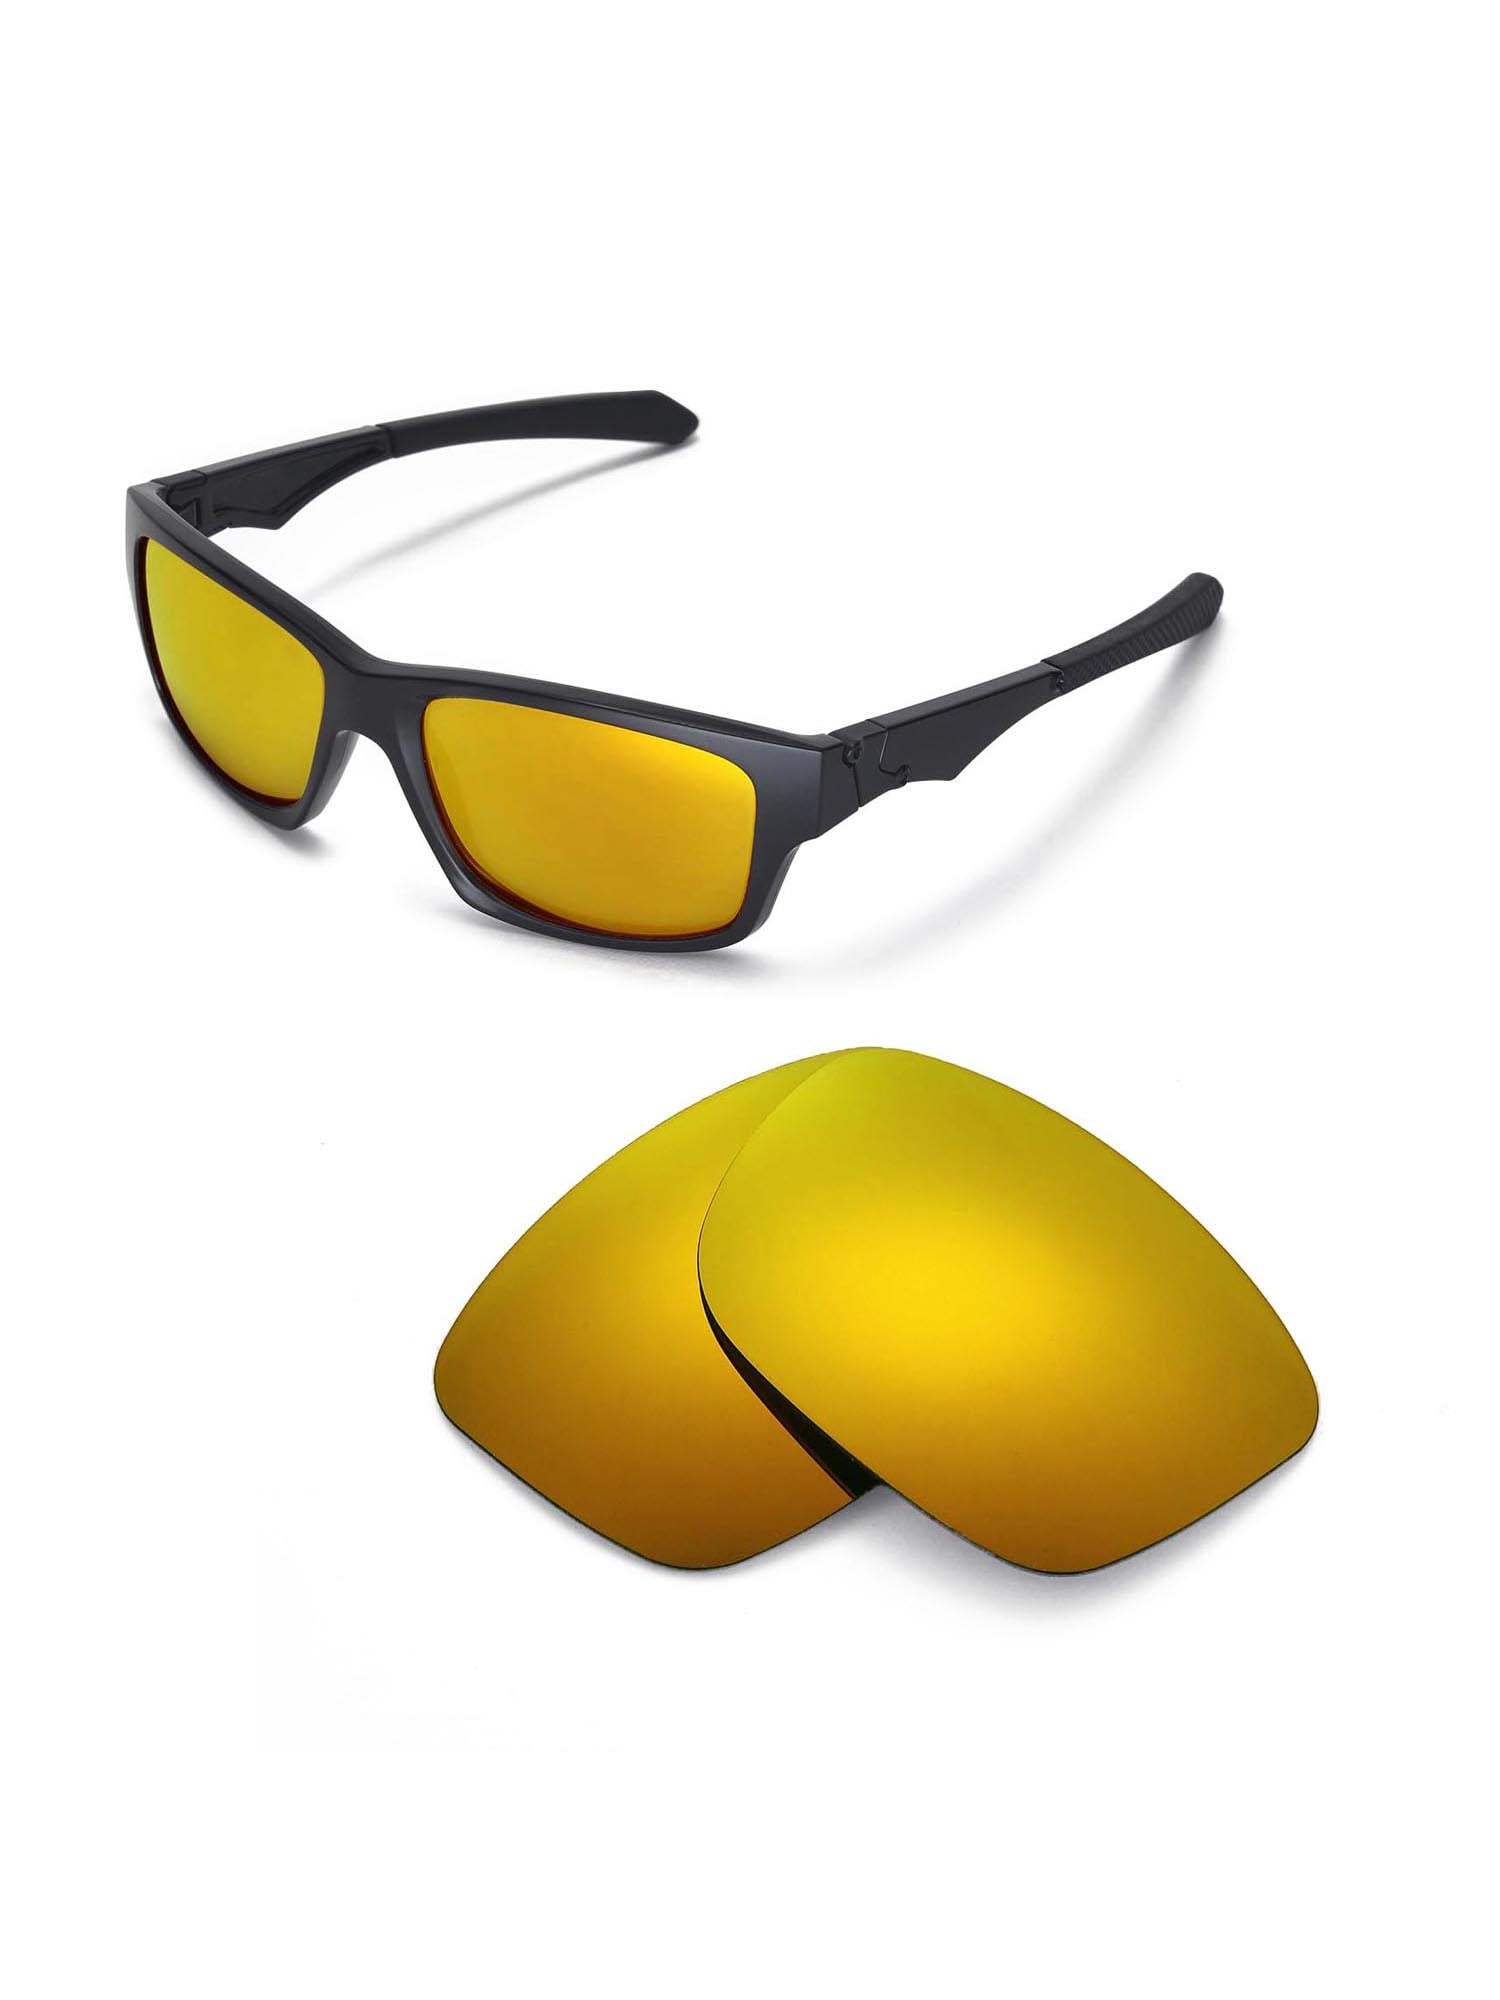 24K Gold Replacement Lenses for Jupiter Squared Sunglasses -